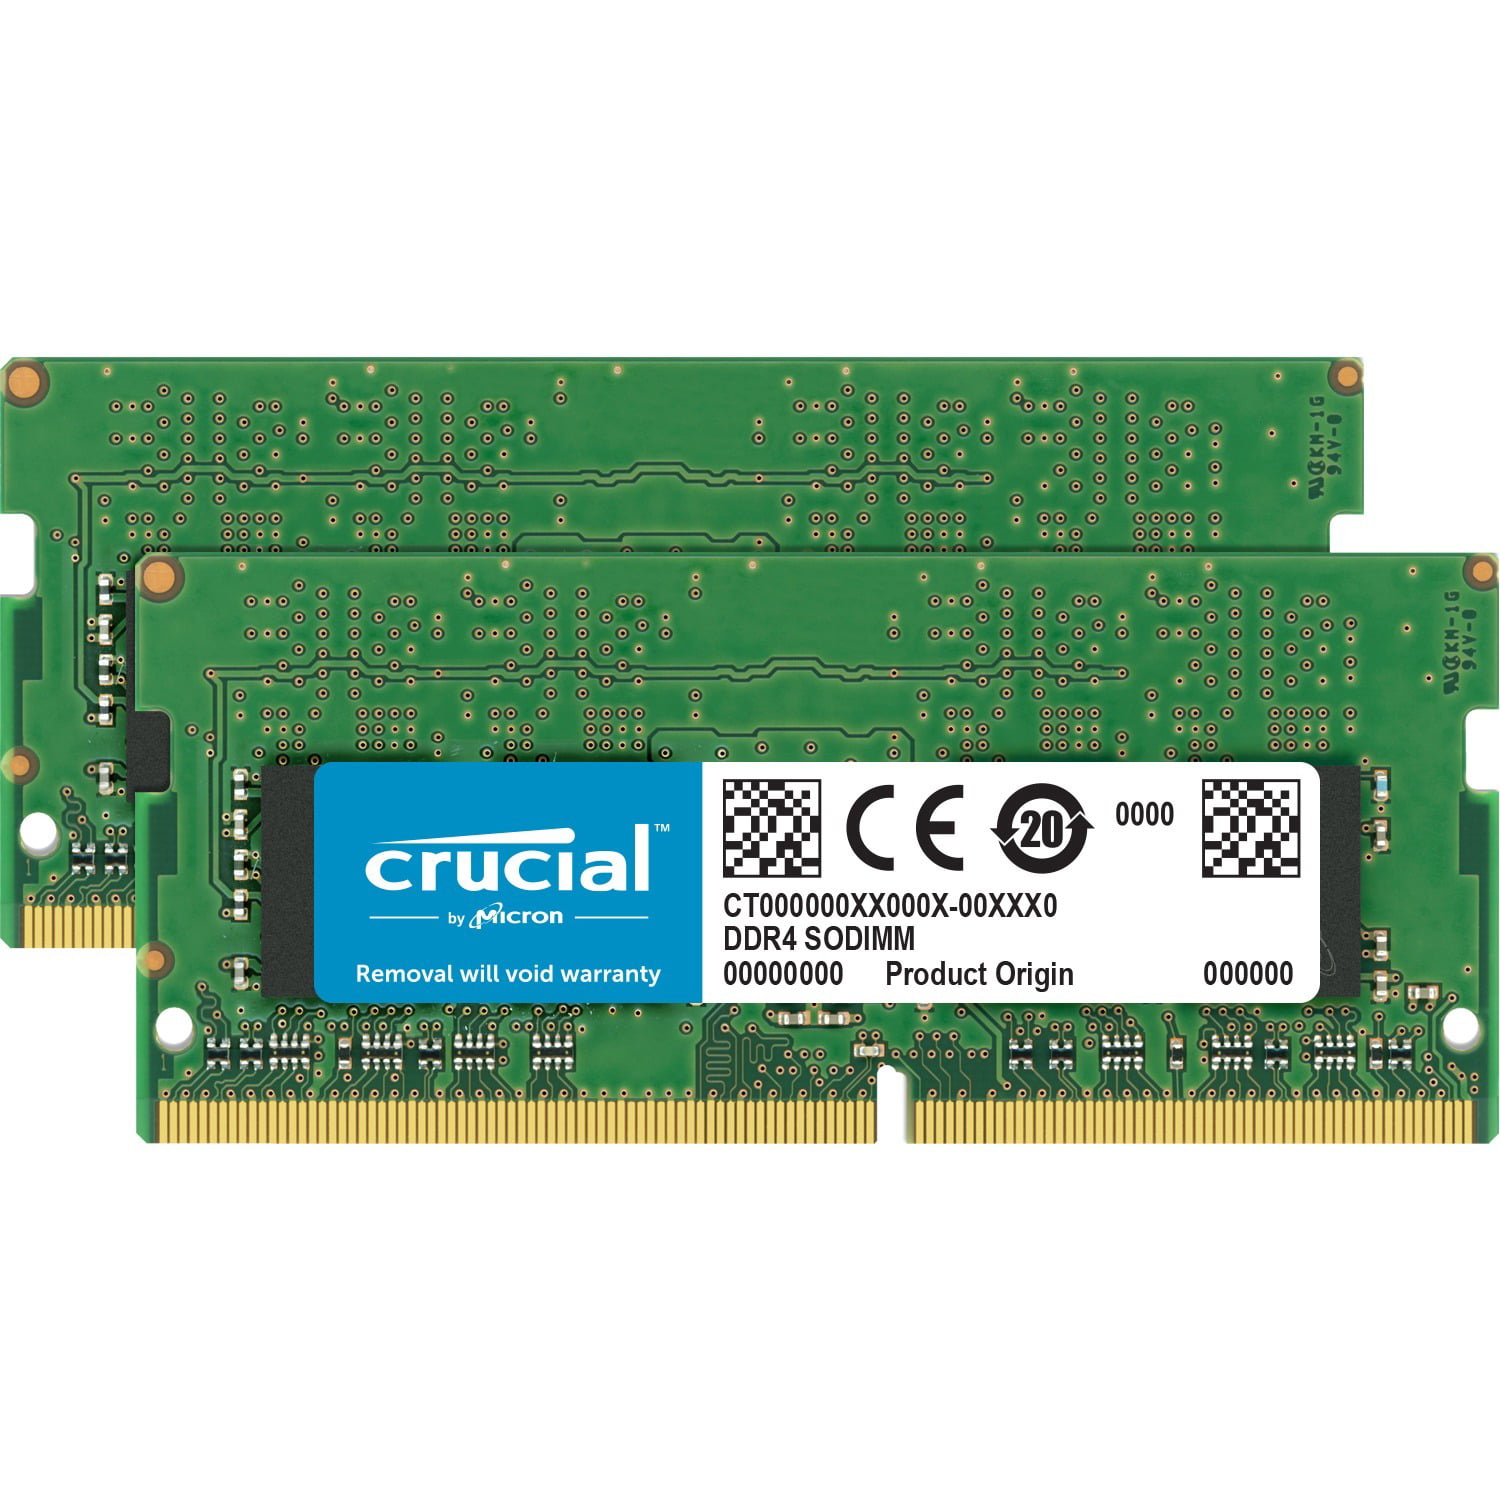 Uluru beskydning Taktil sans Crucial 16GB Kit (2 x 8GB) DDR4-2400 SODIMM Memory for Mac - Walmart.com